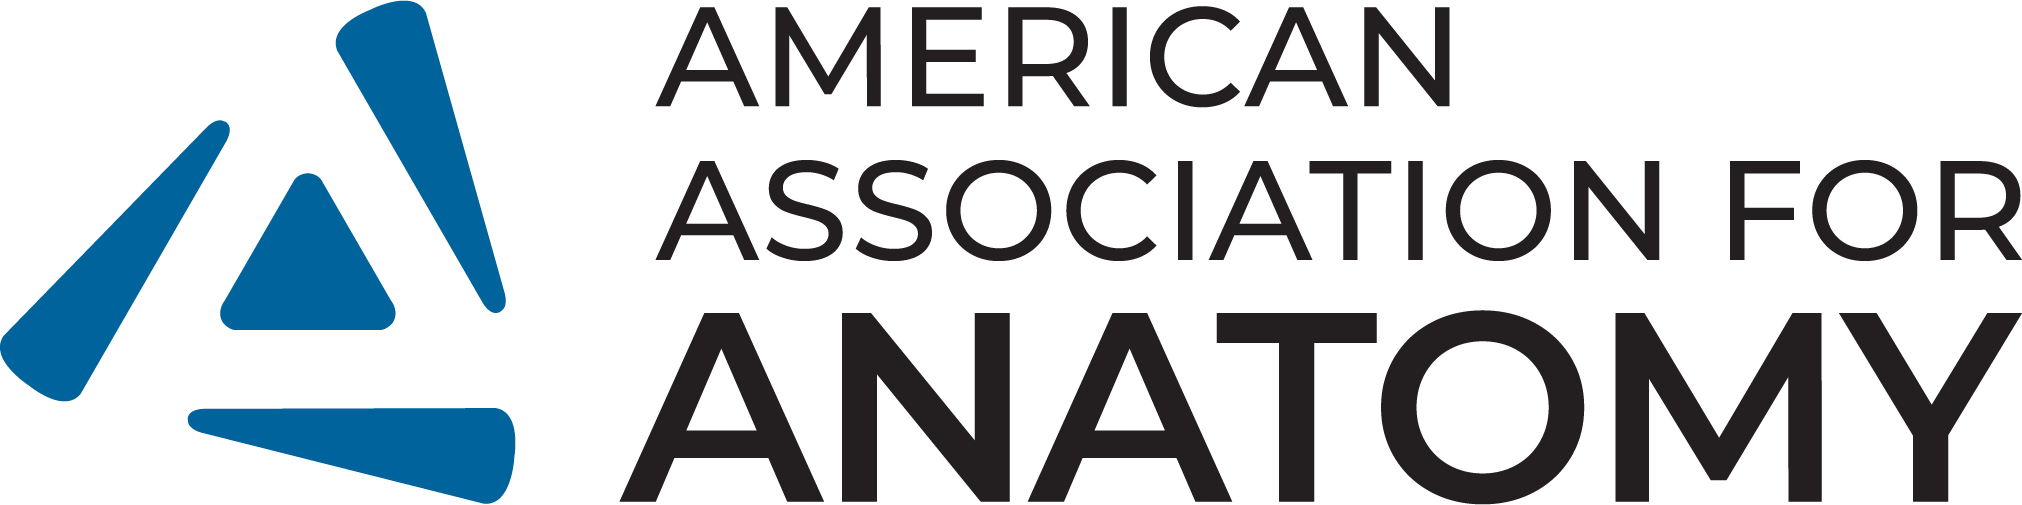 American Association of Anatomists logo